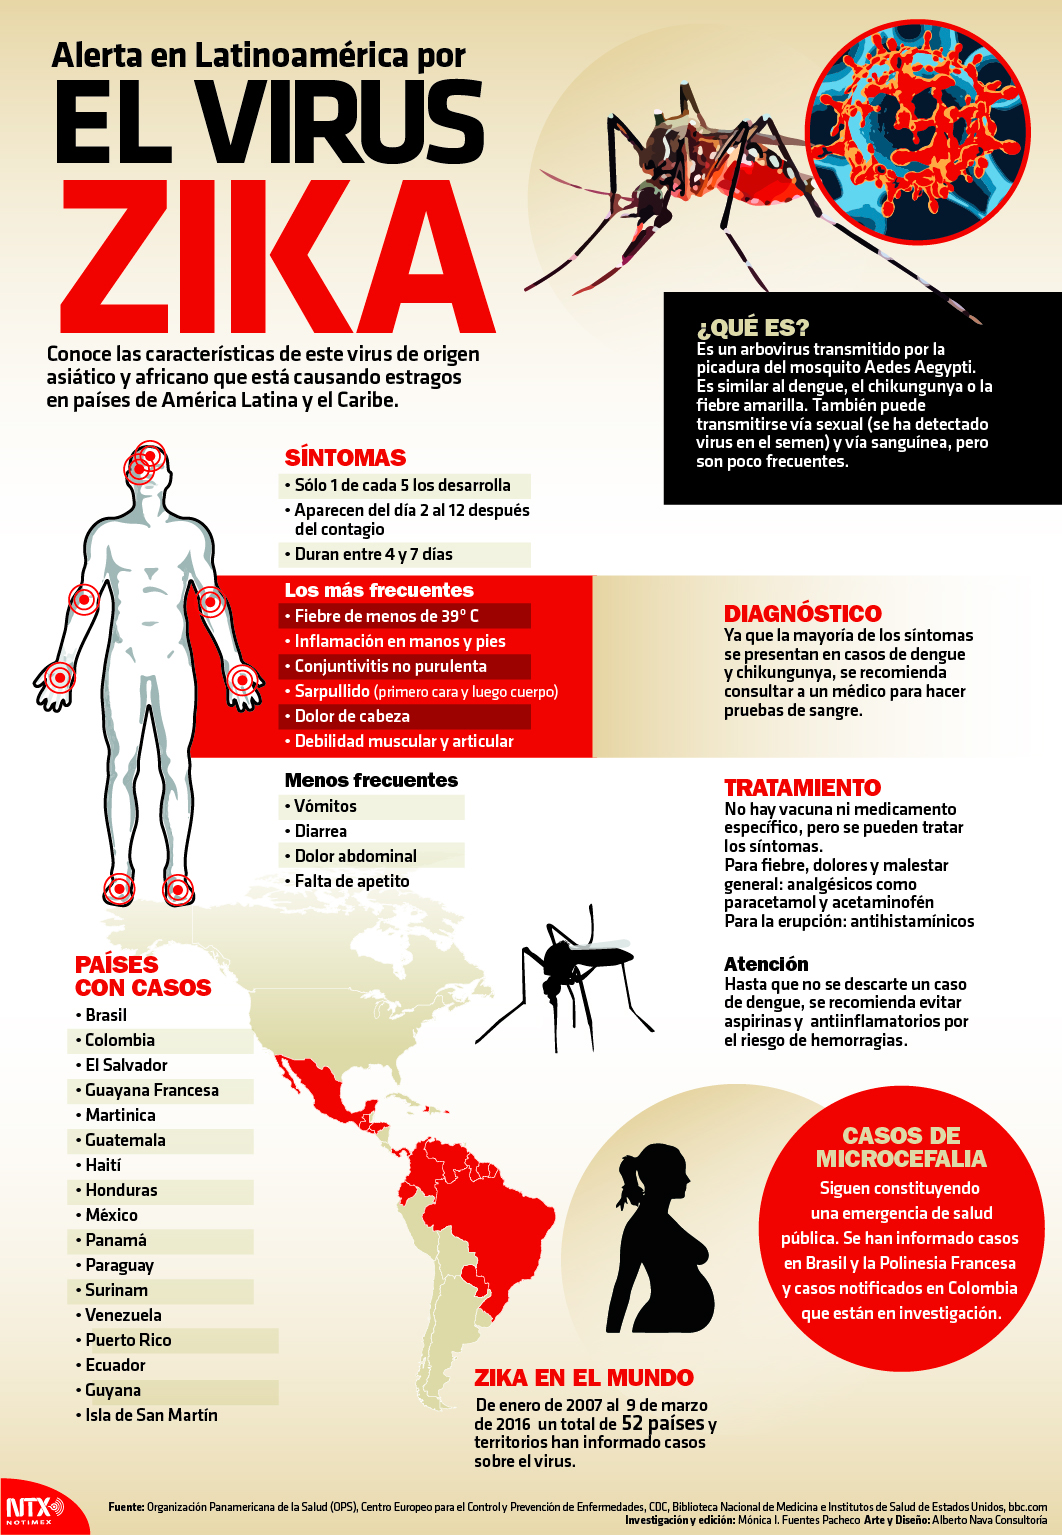 Alerta en Latinoamrica por virus del Zika